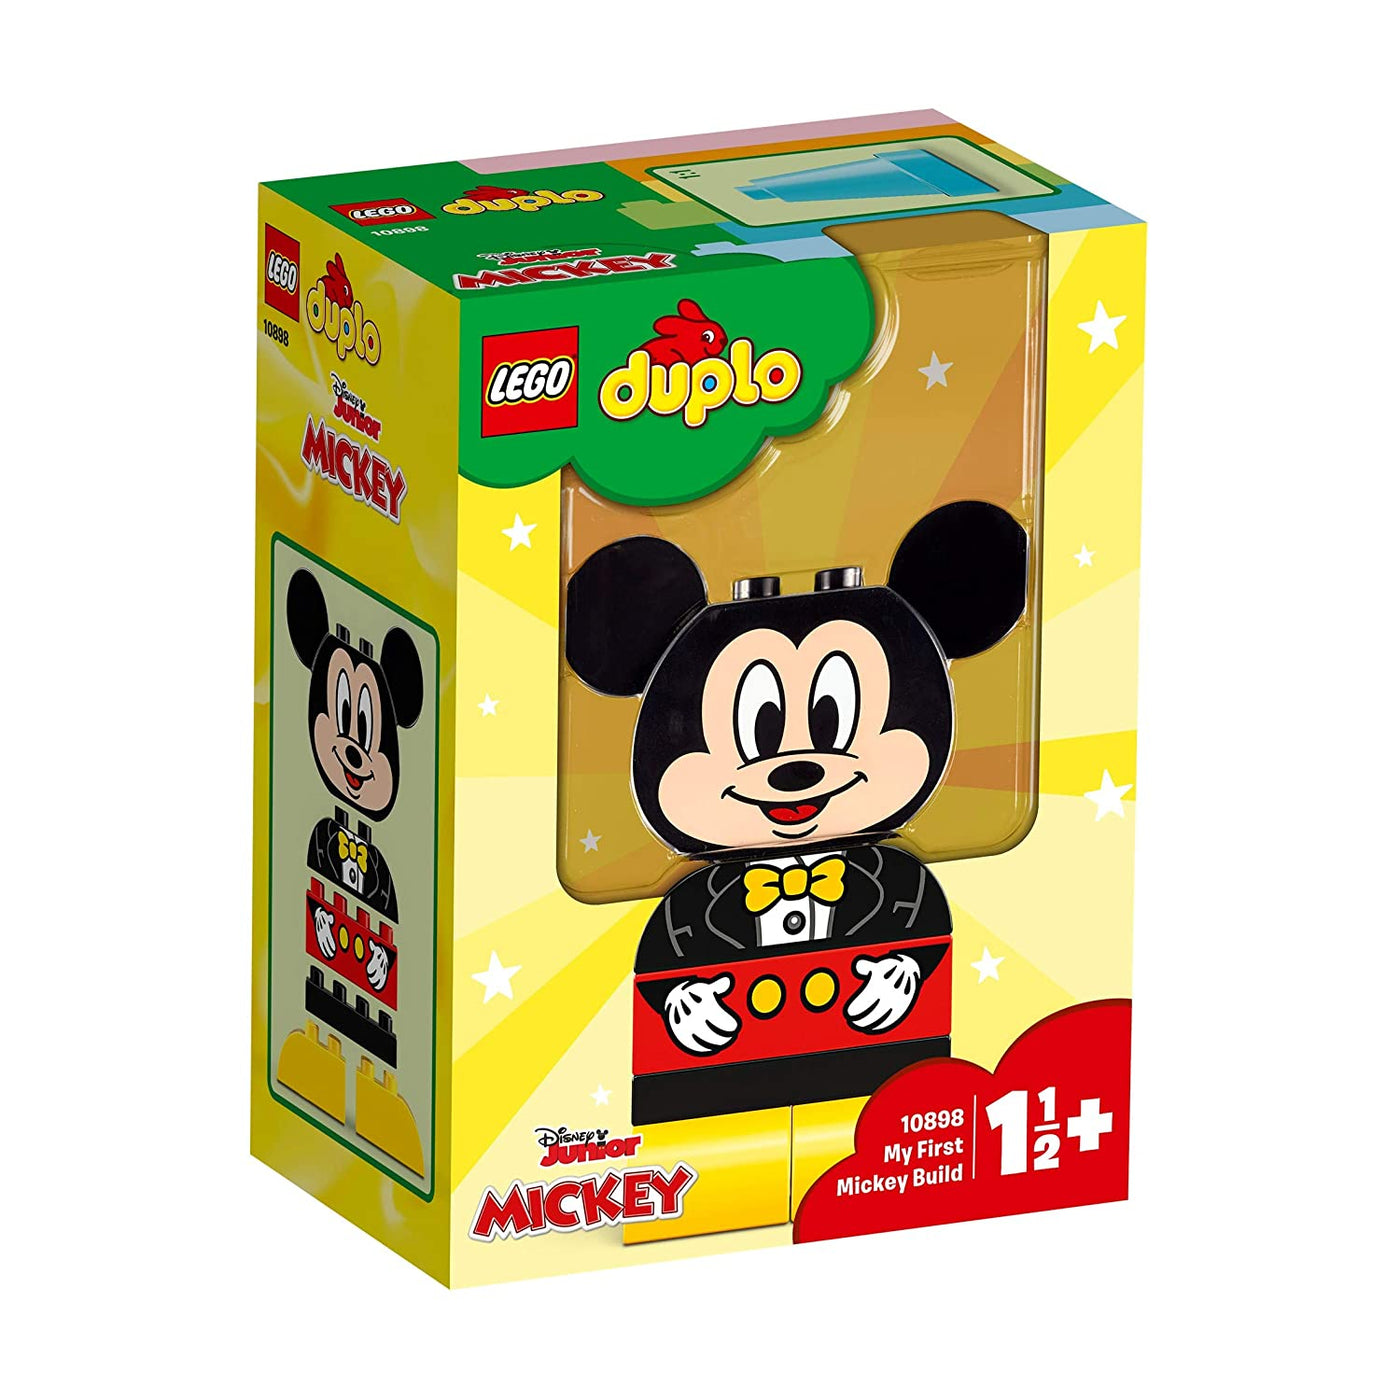 LEGO DUPLO My First Mickey Build, 10898